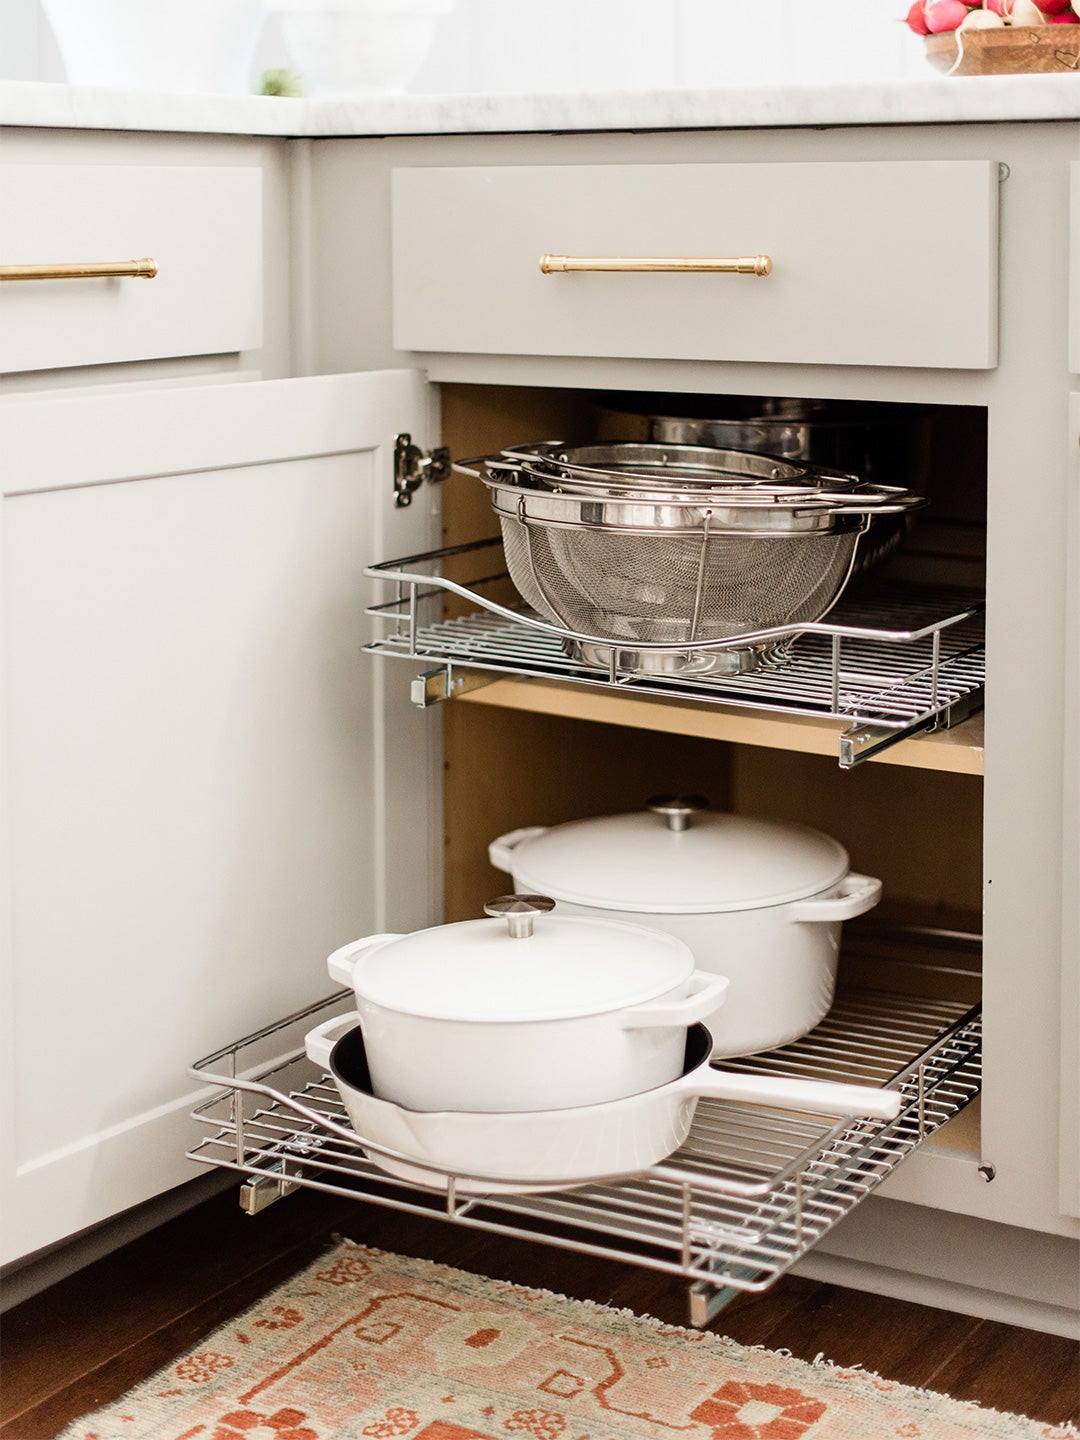 kitchen cabinet pots and pans organization